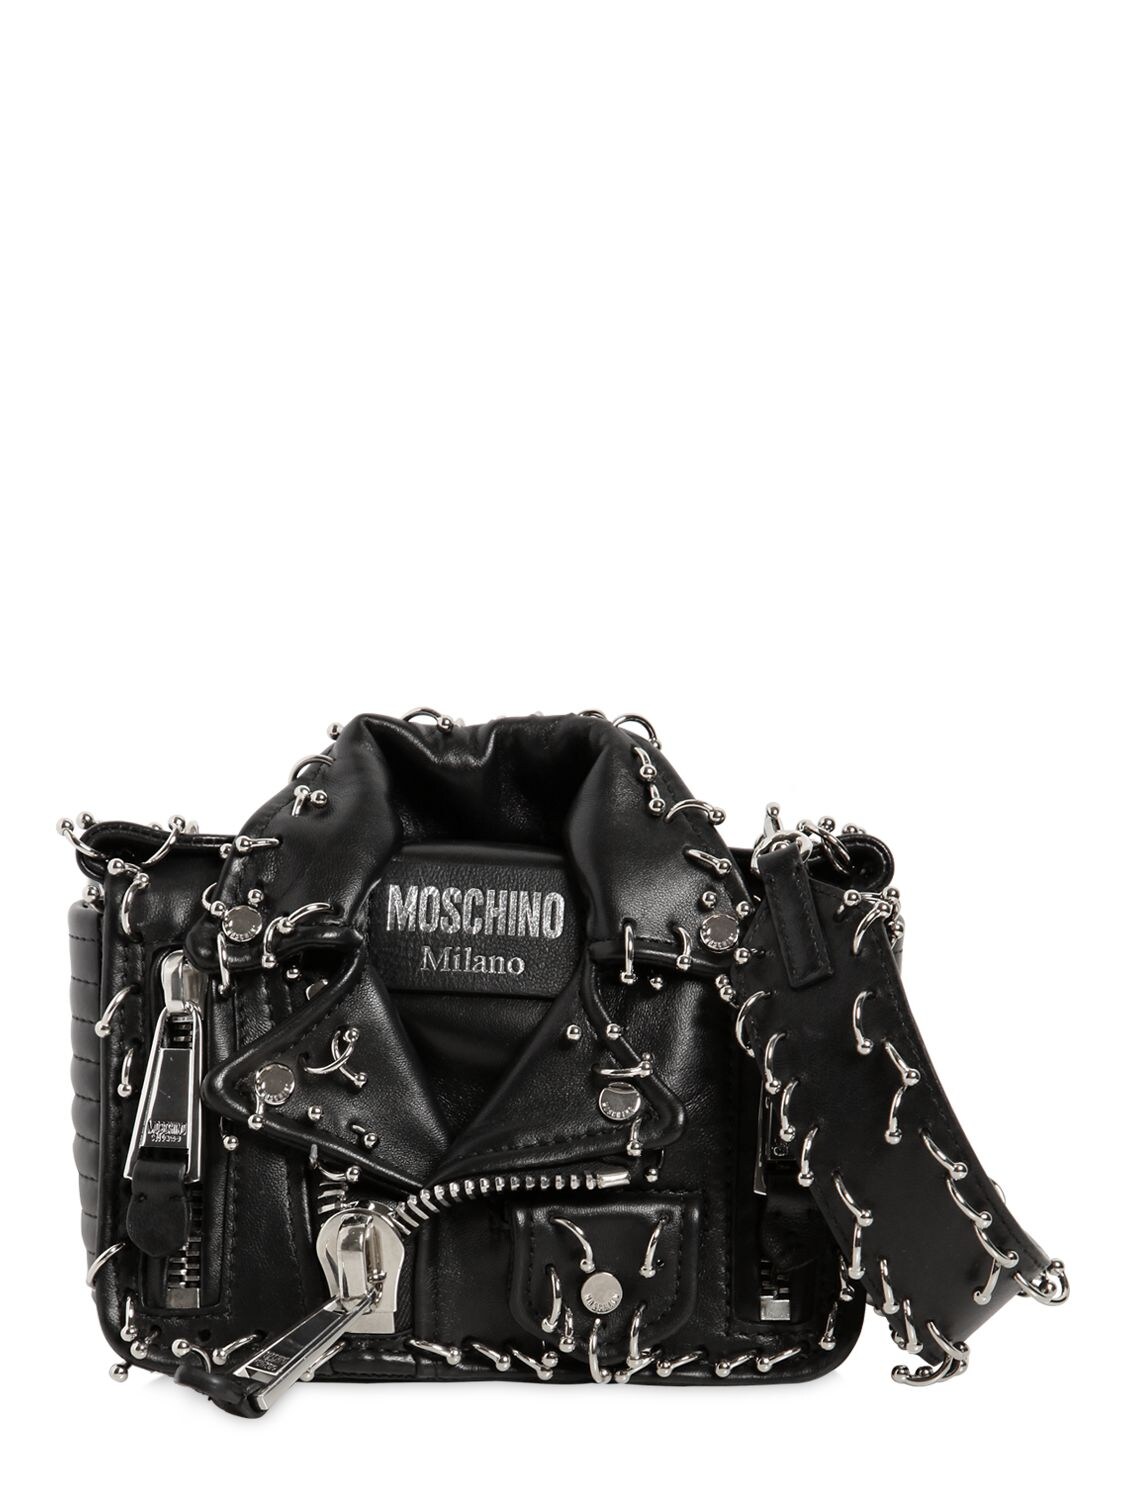 Moschino Piercing Biker Leather Shoulder Bag In Black